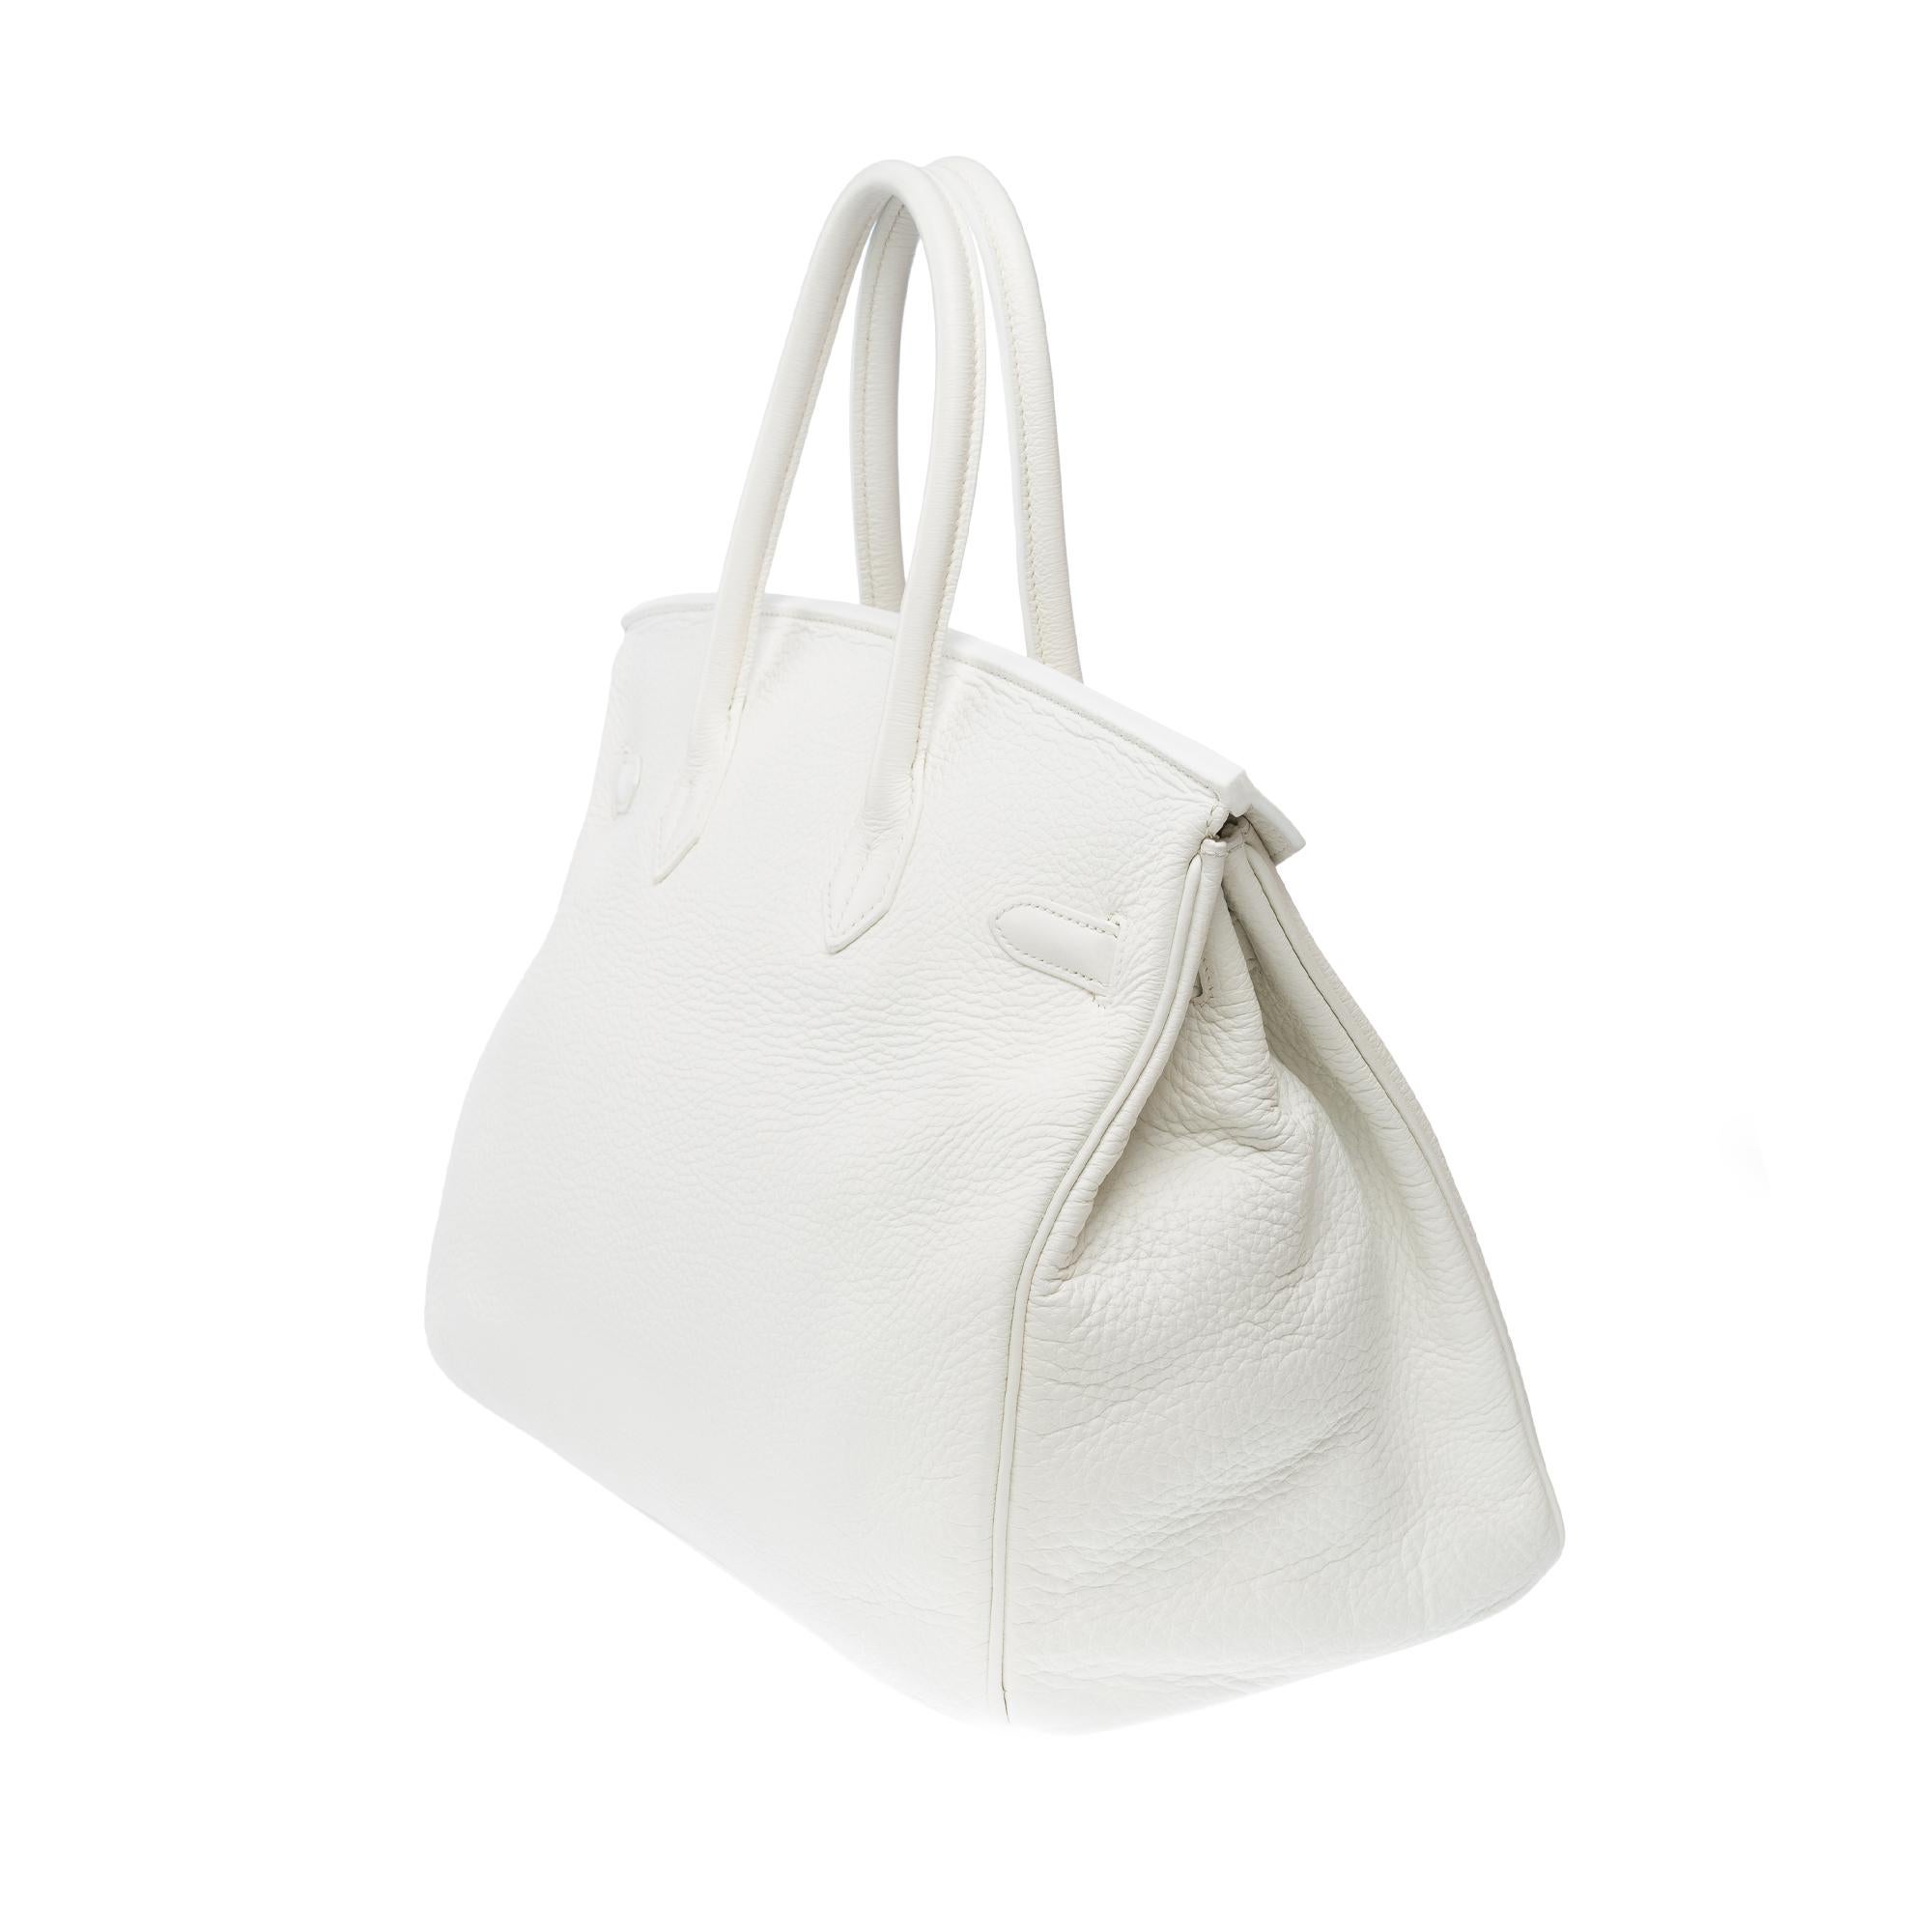 Stunning Hermès Birkin 35 handbag in White Taurillon Clemence leather, SHW 2